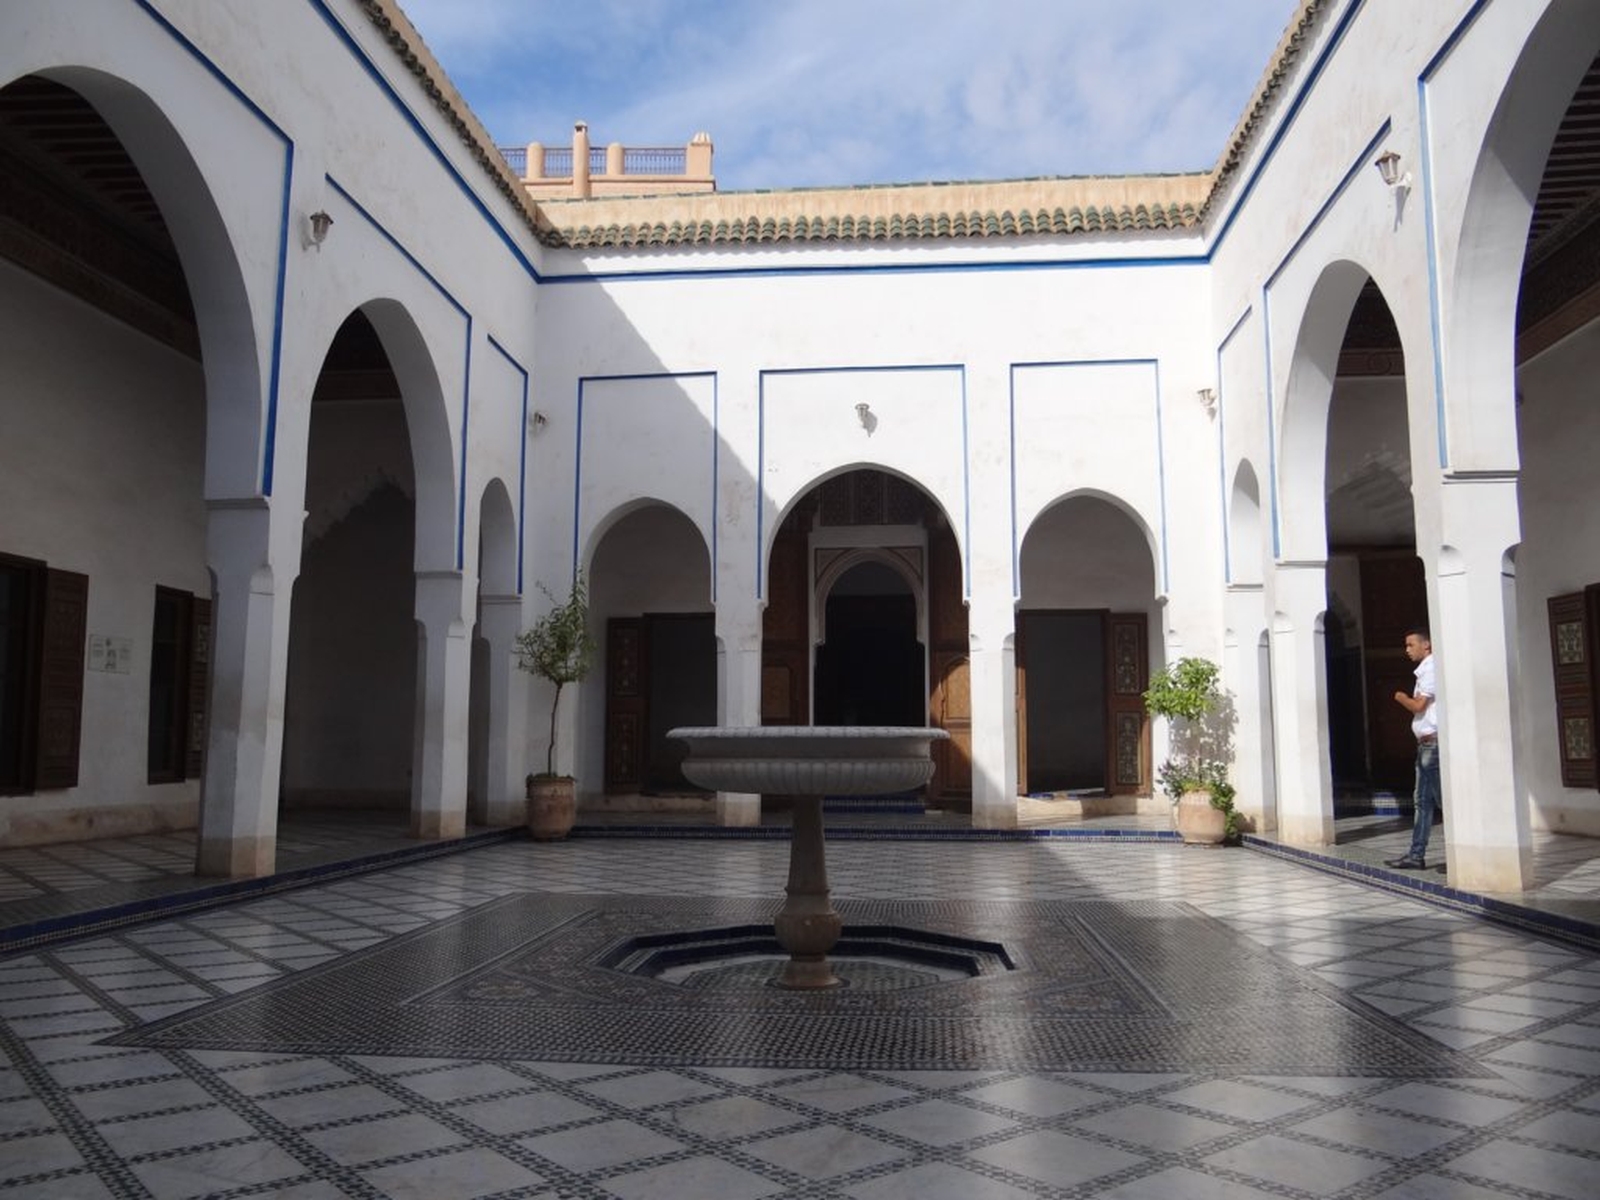 462 - Marrakech - Palais de la Bahia